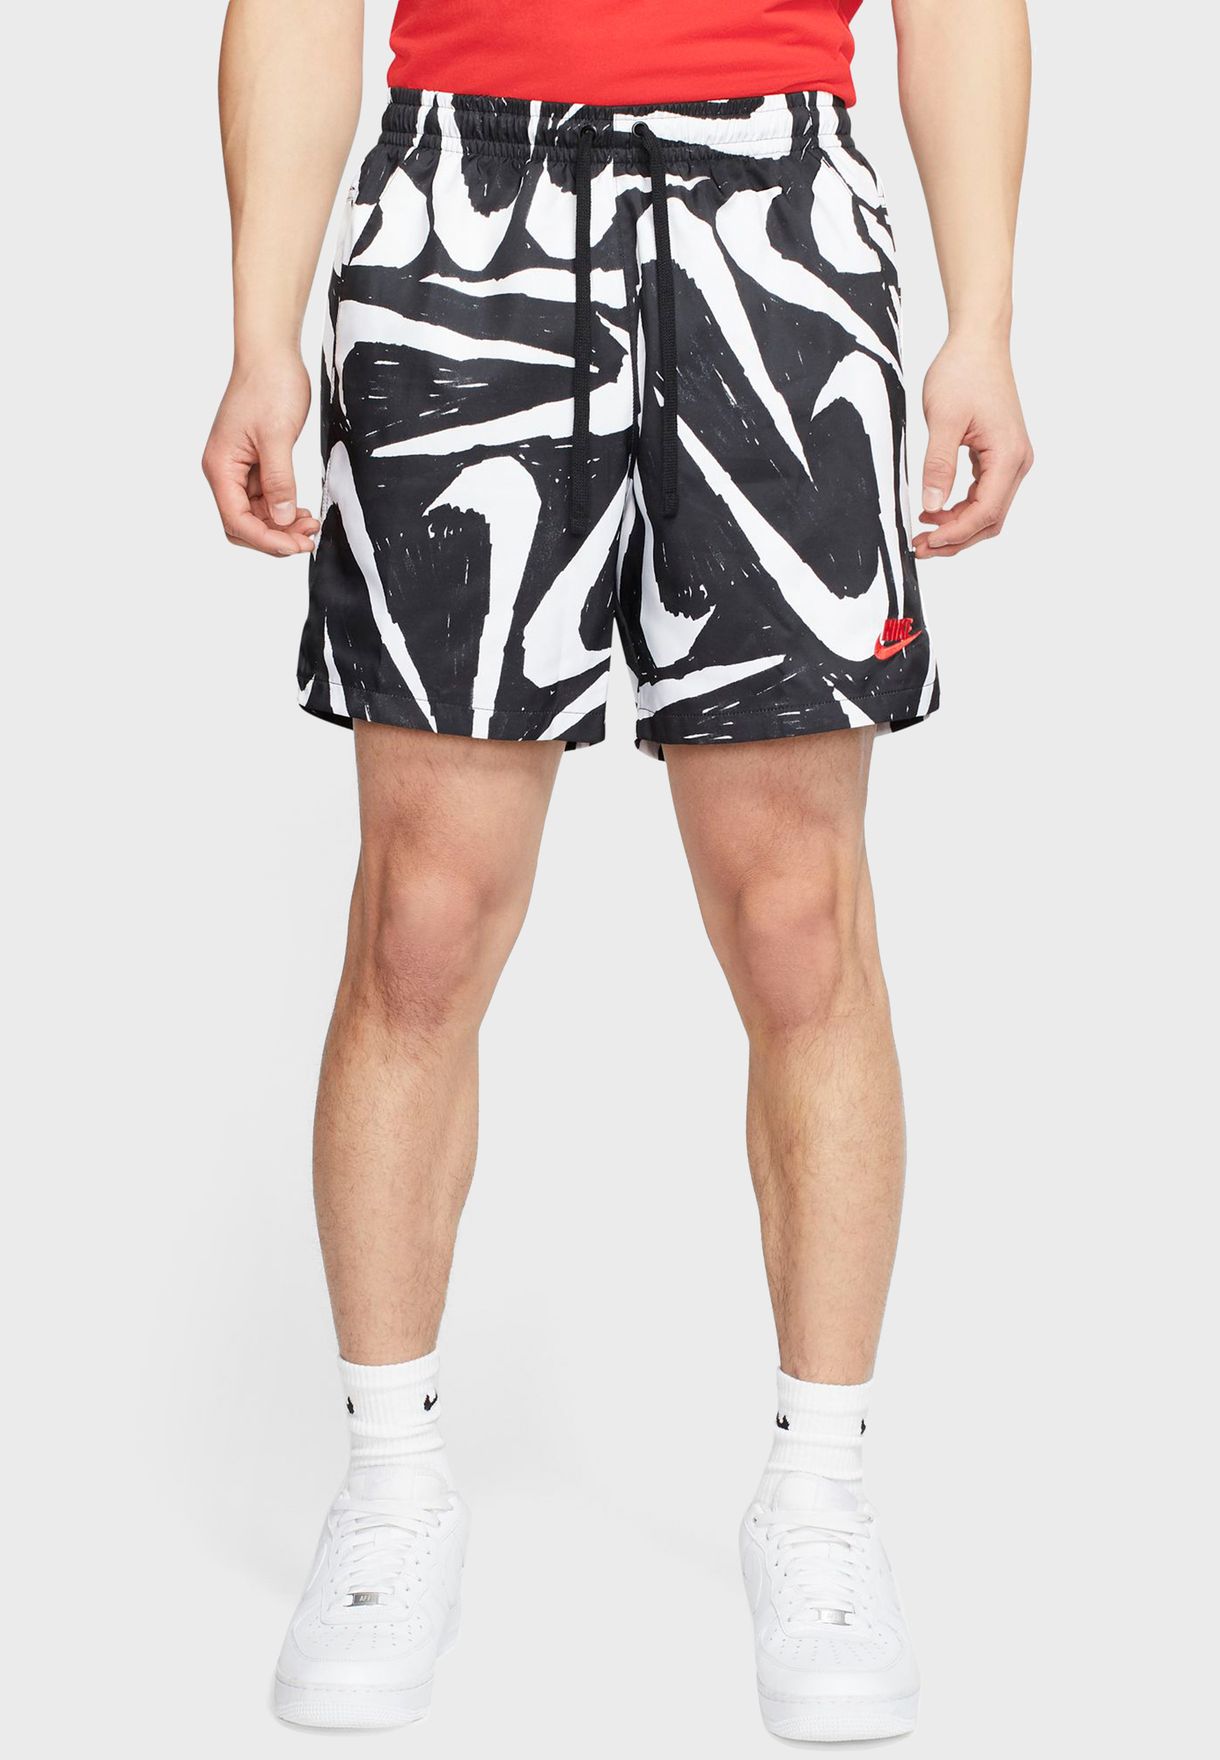 nike woven mirror logo shorts